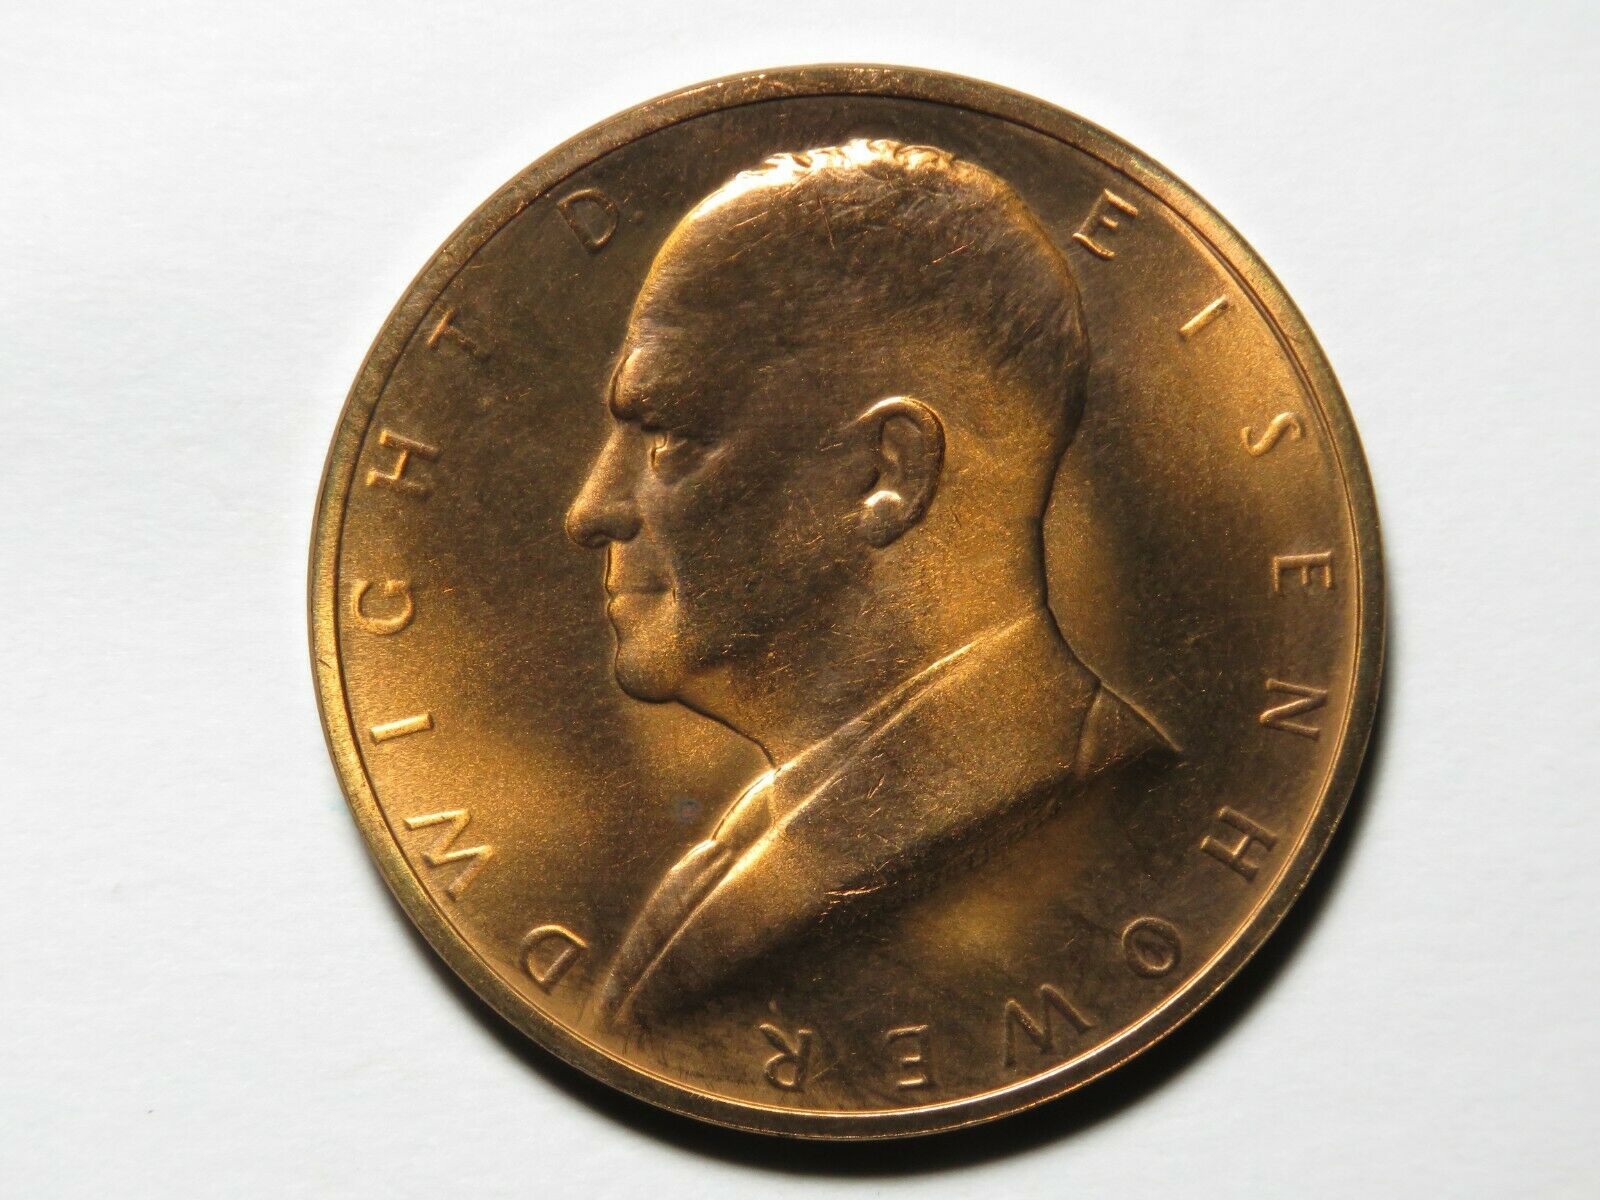 Dwight Eisenhower Inaugural Medal - Us Mint